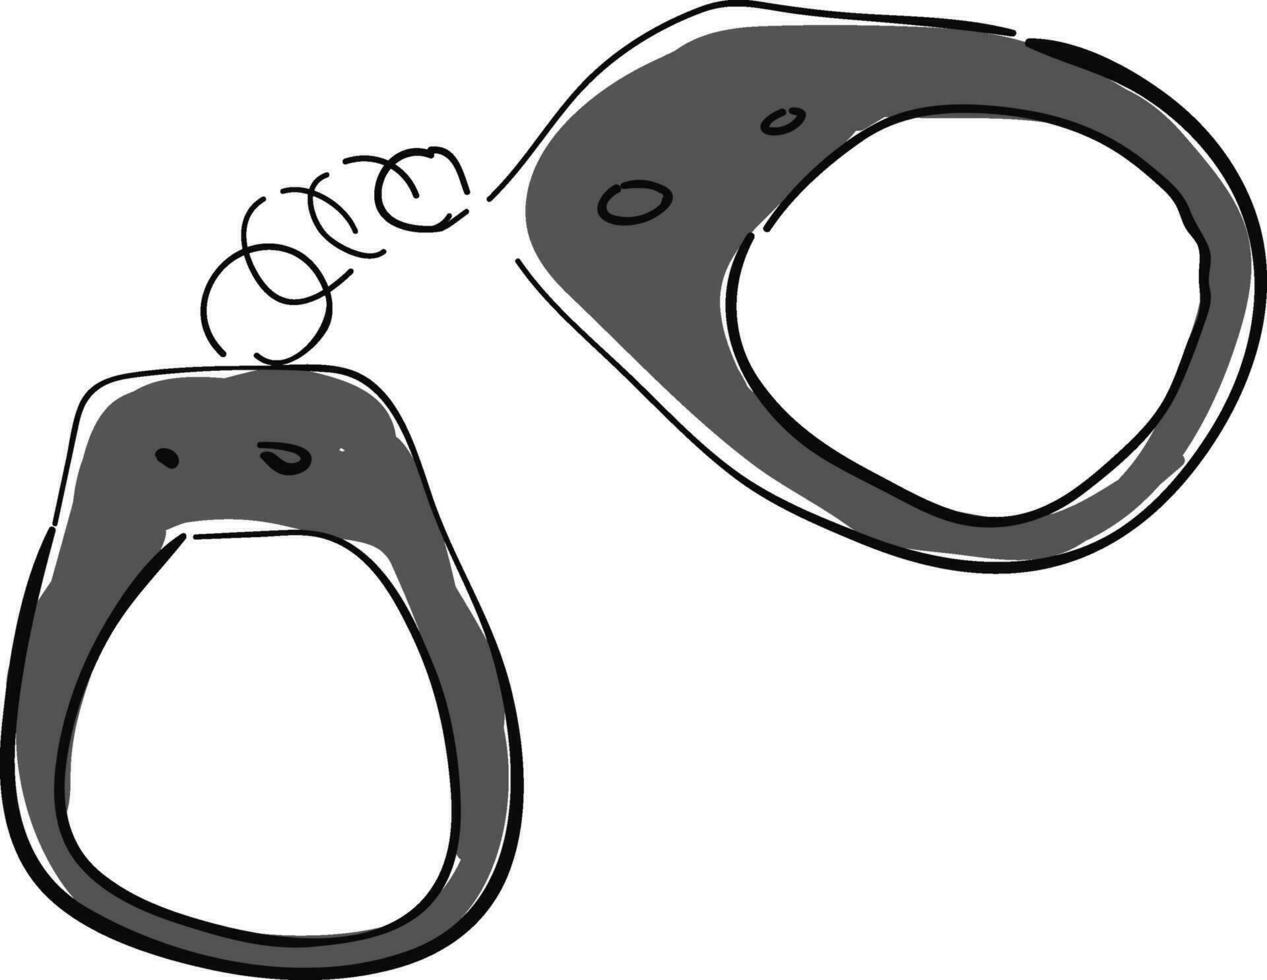 Handcuffs, vector or color illustration.